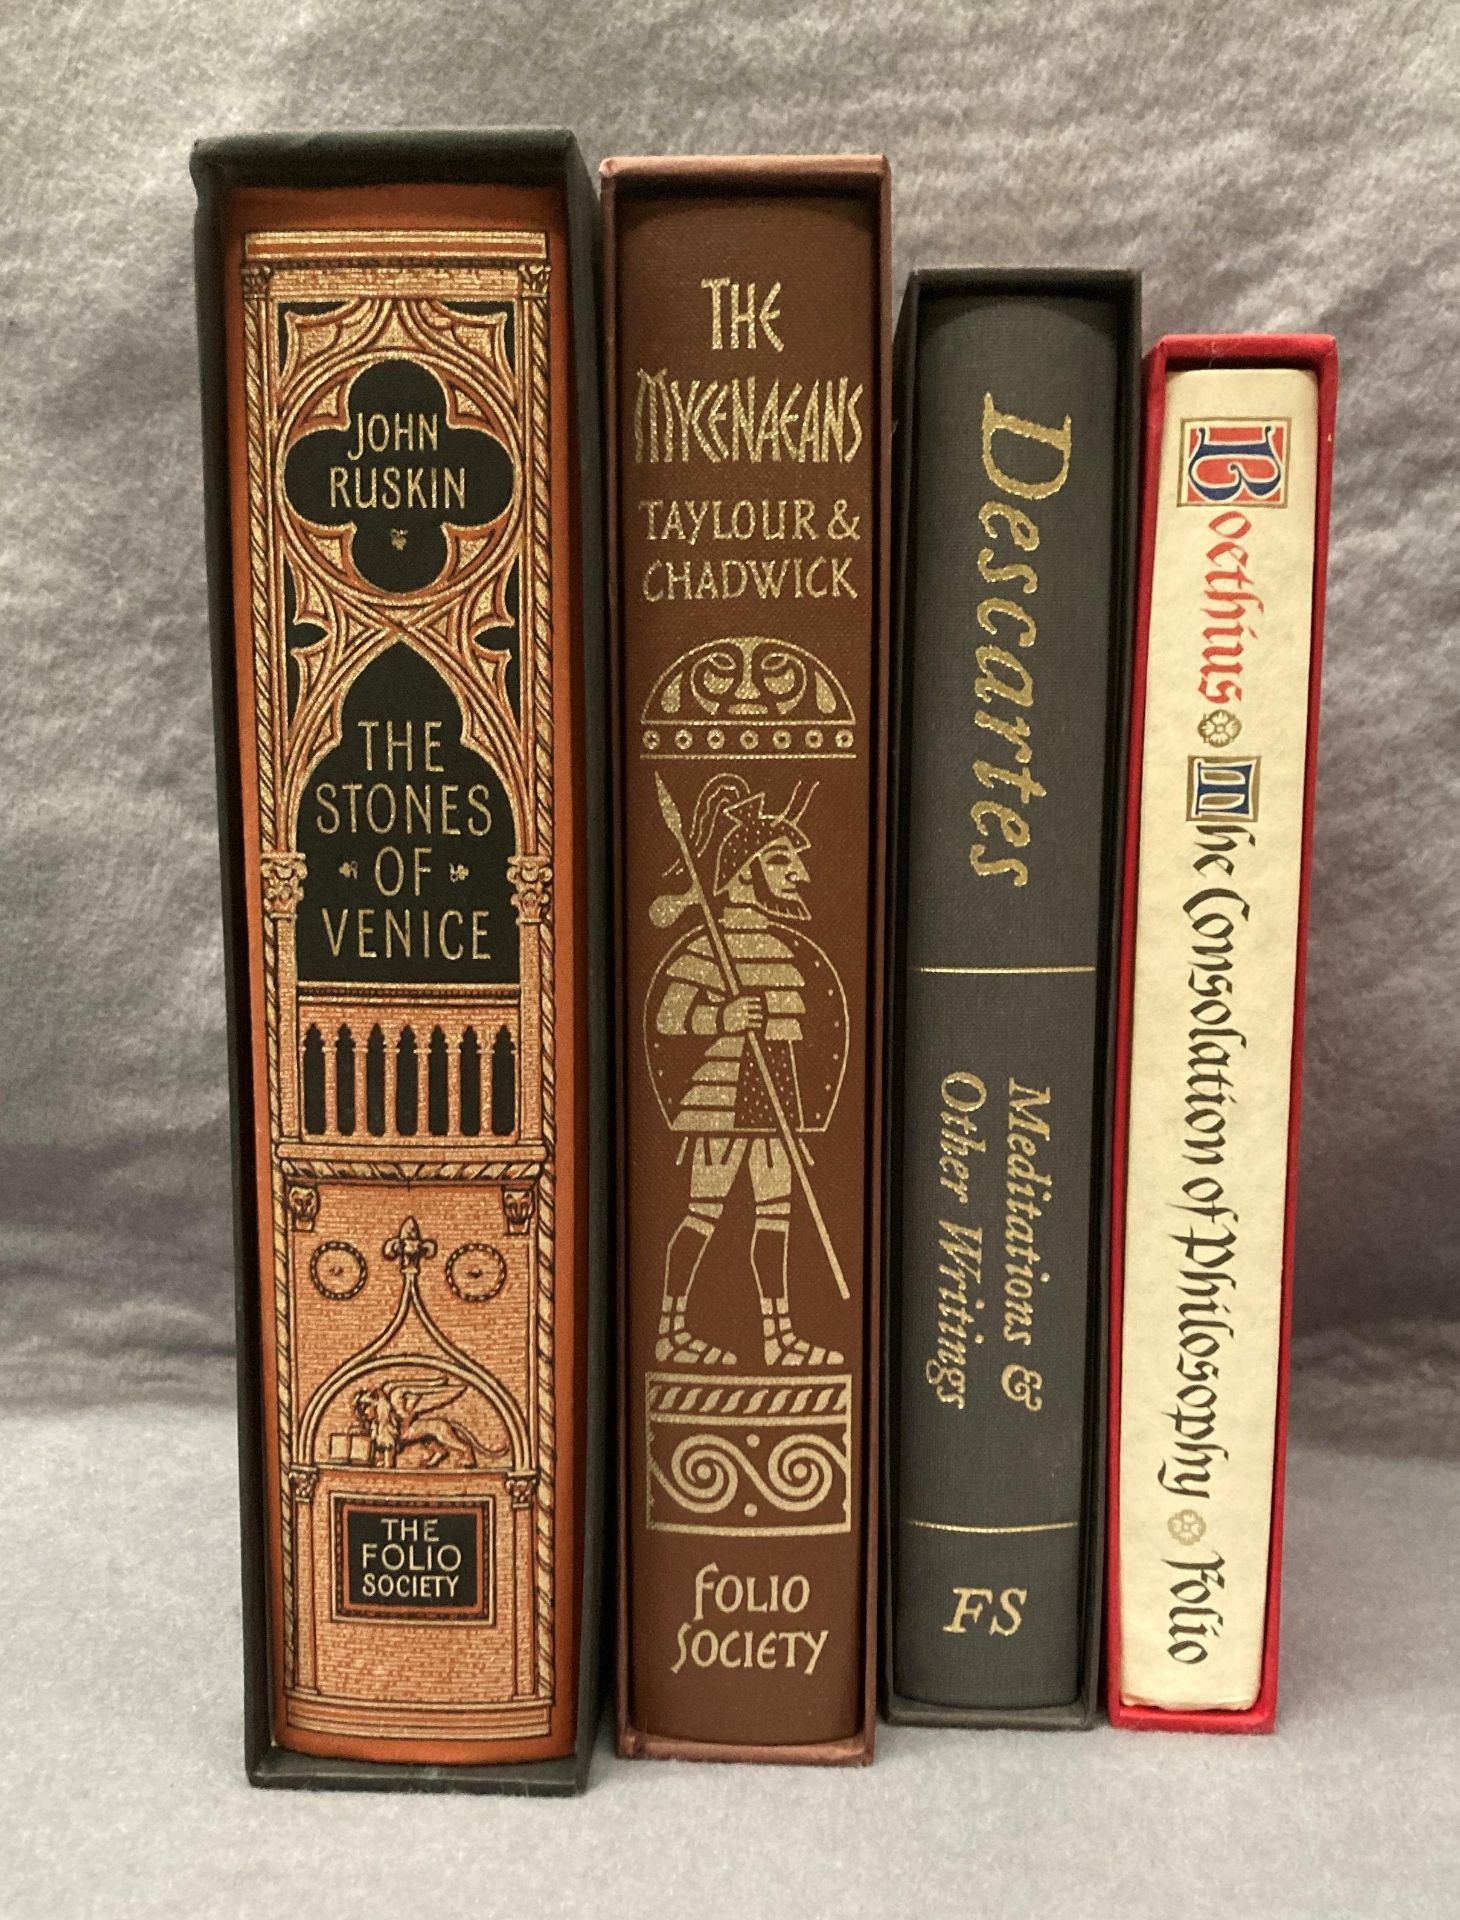 Four Folio Society books by John Ruskin 'The Stones of Venice' 2001,